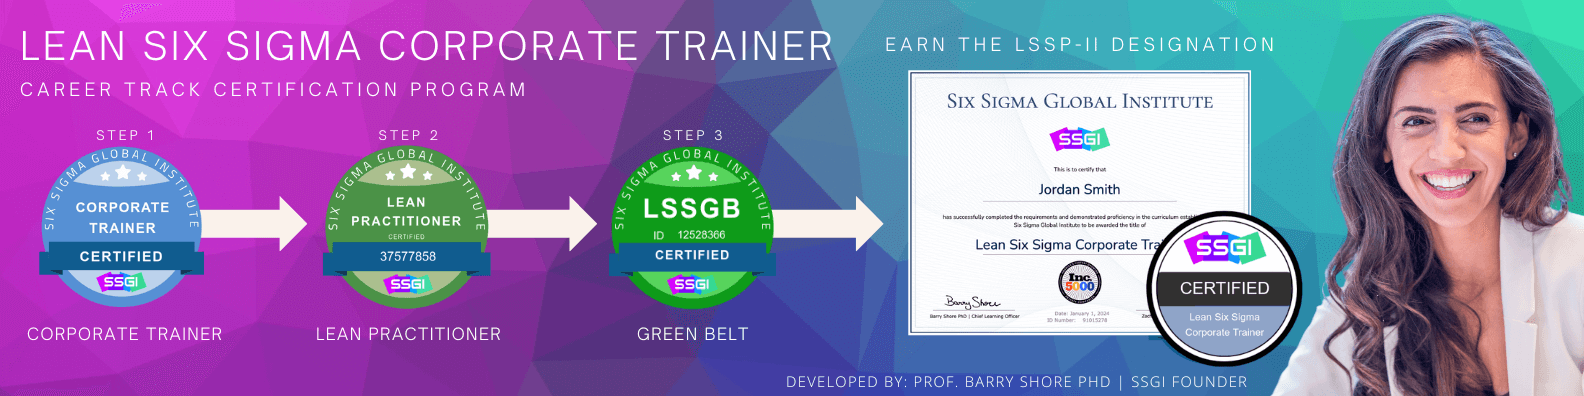 Lean Six Sigma Corporate Trainer Certification SSGI